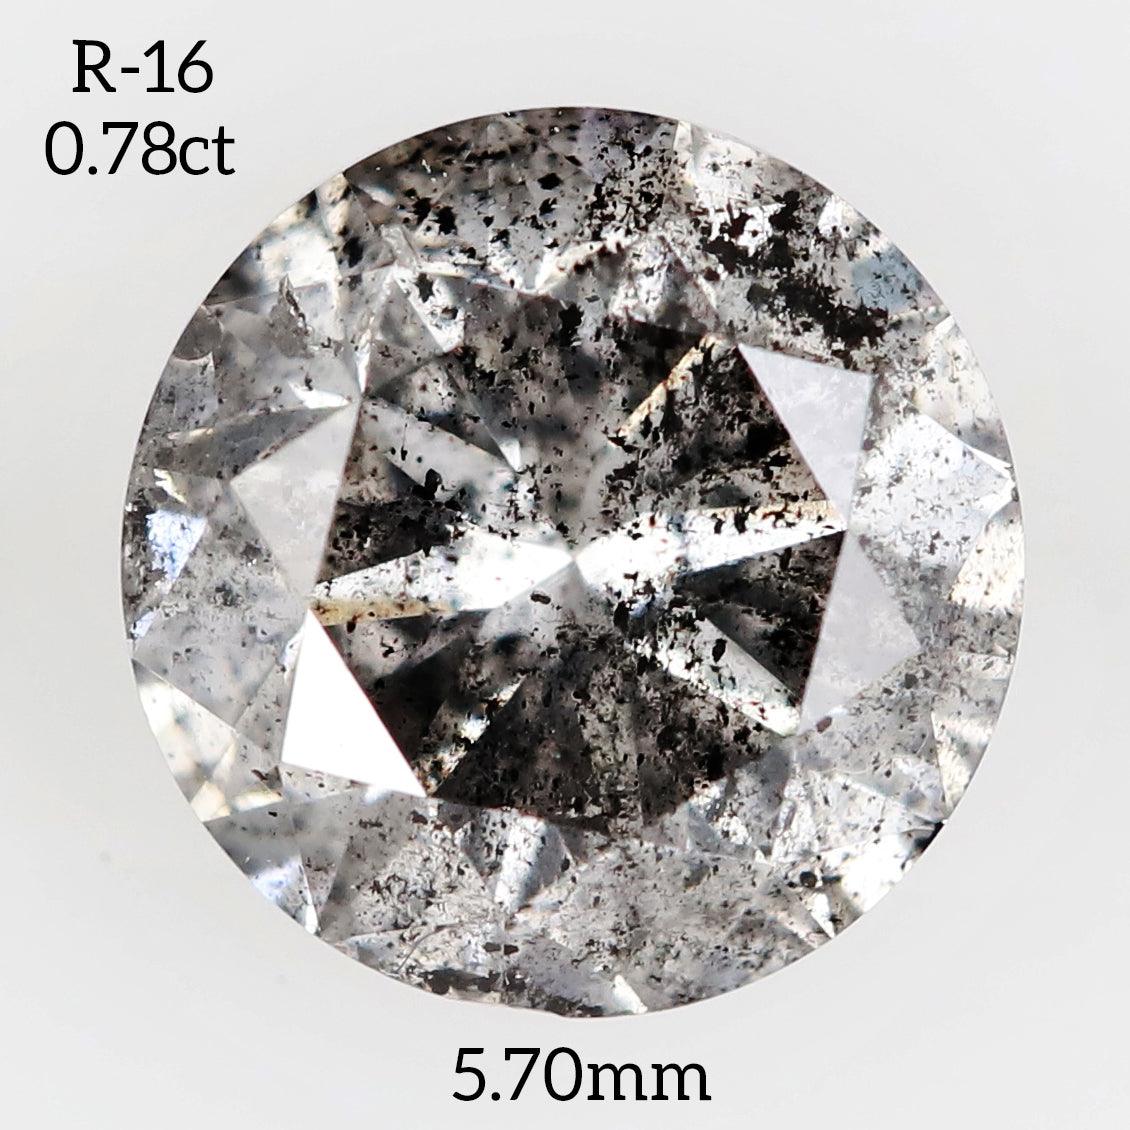 R16 - Salt and pepper round diamond